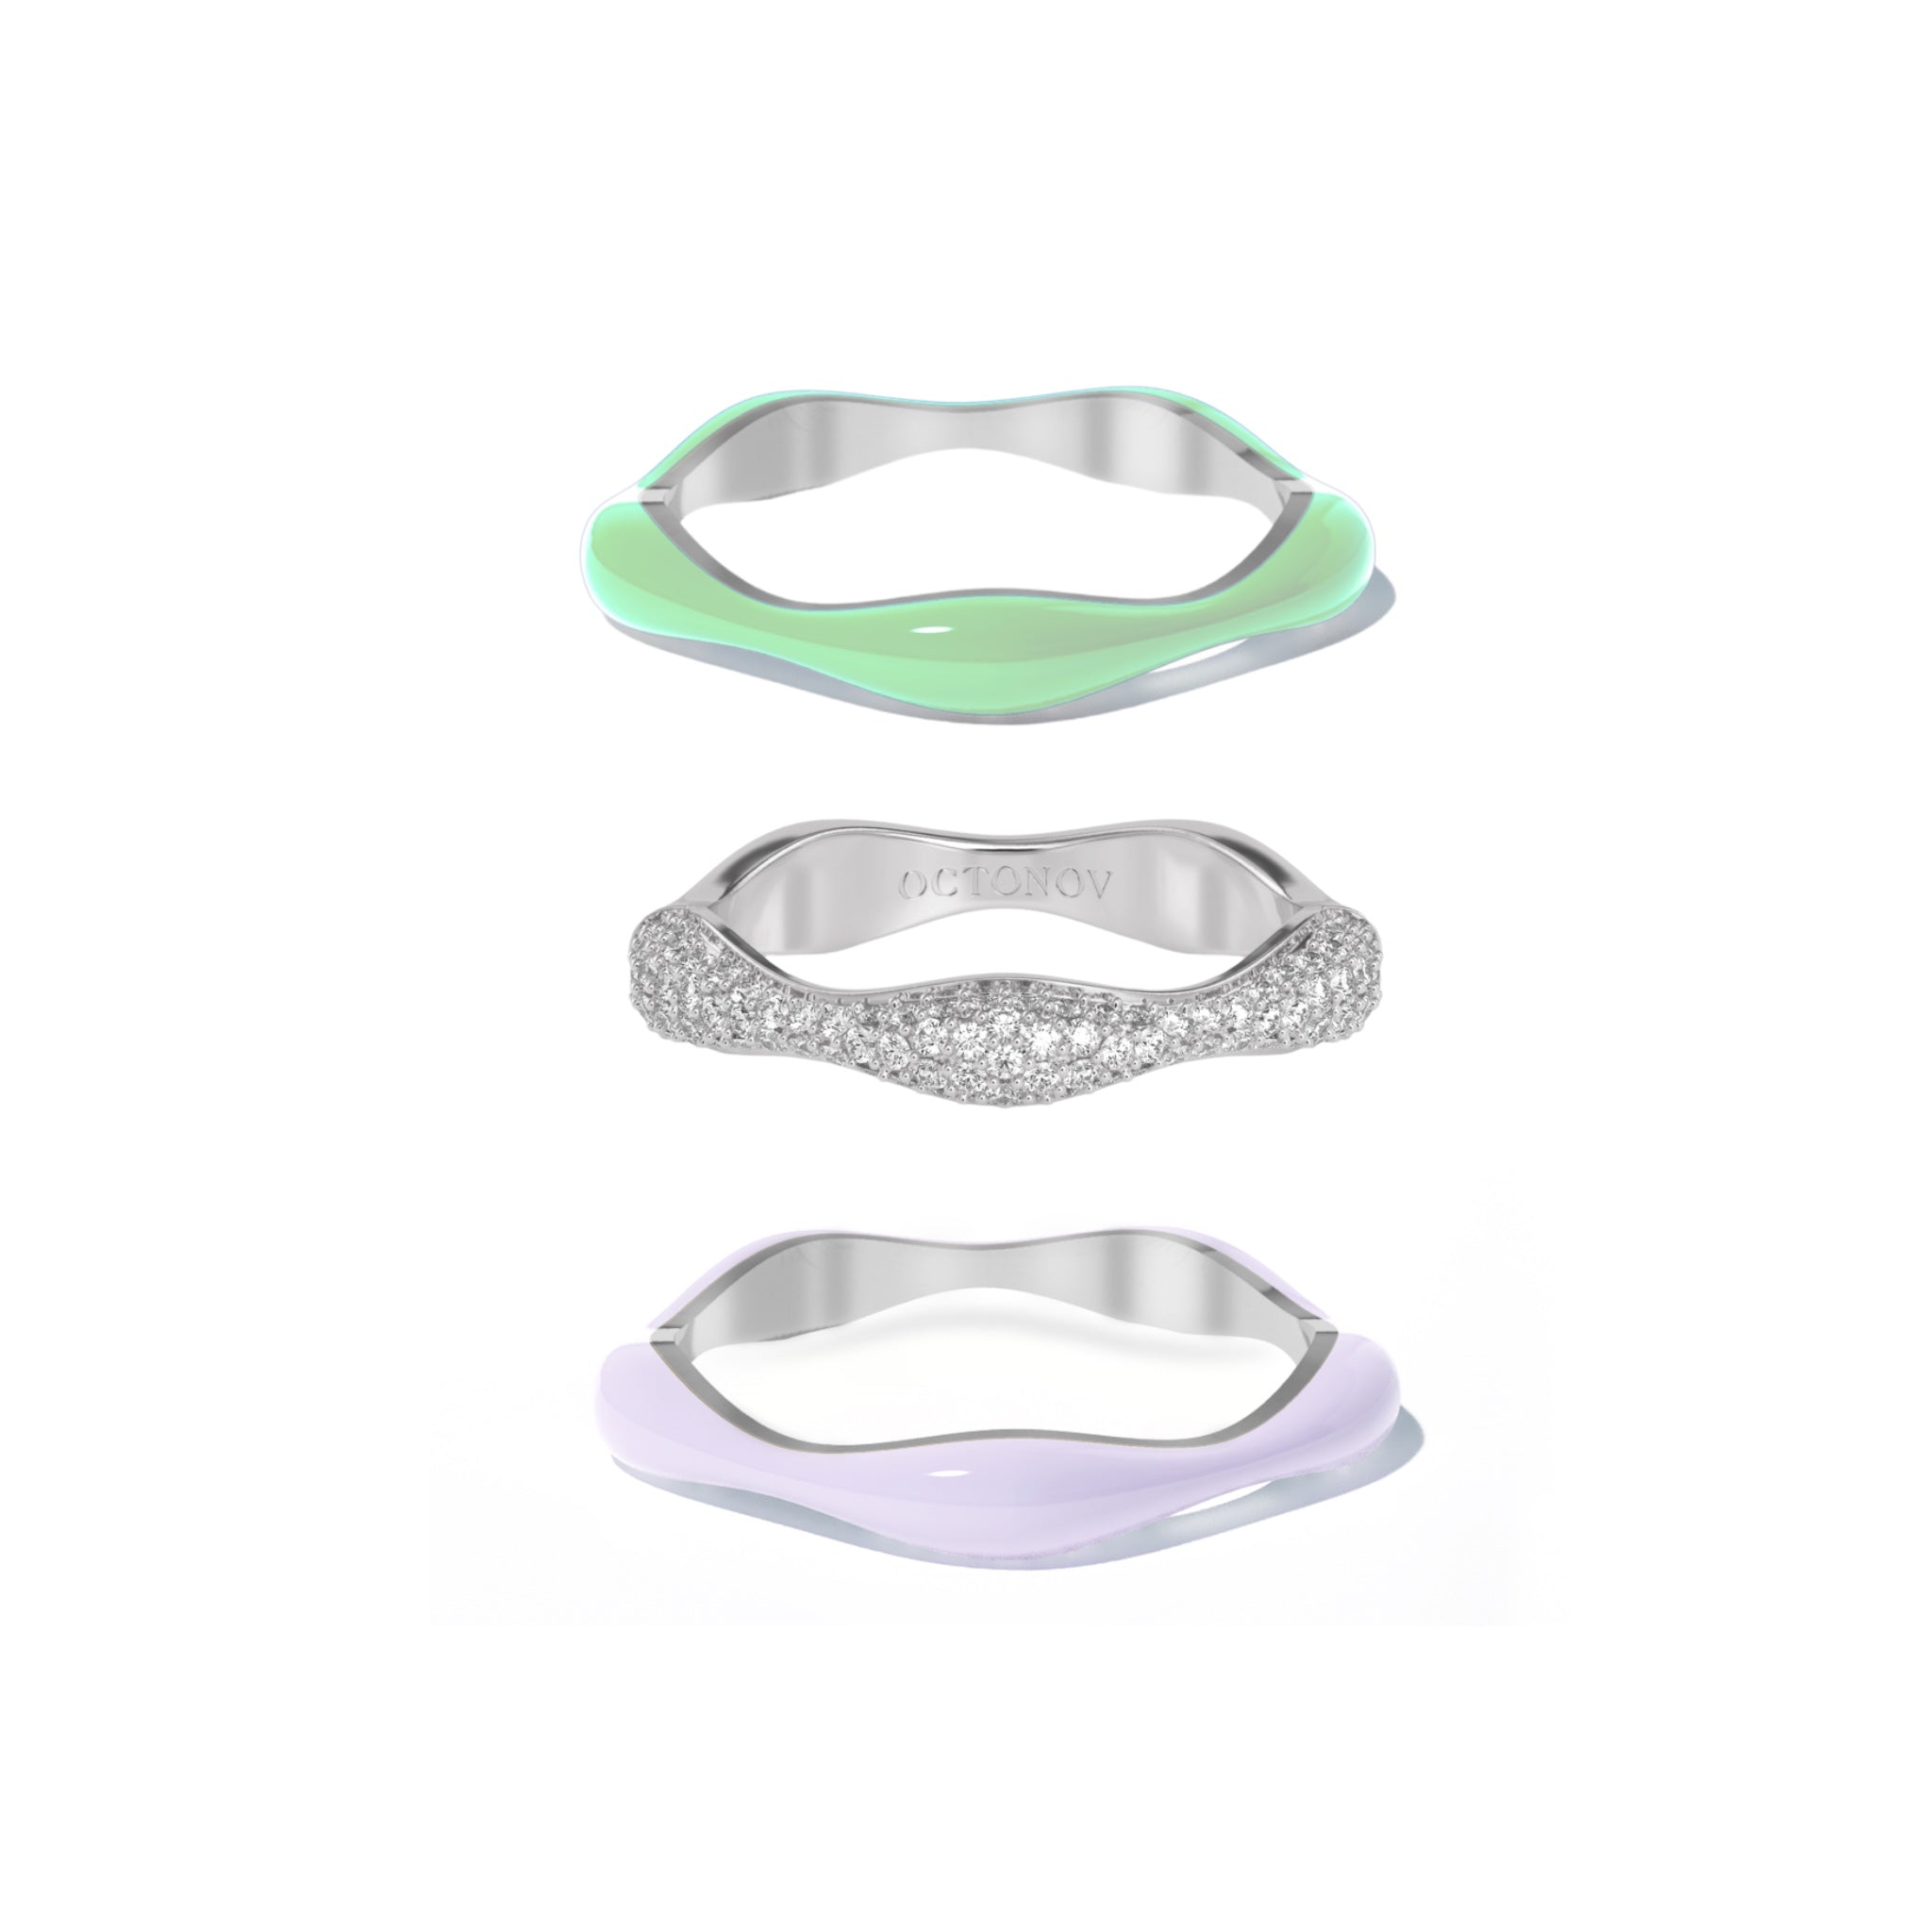 Sorbet Swirls Lavender & Matcha Green Enamel & Diamond Swirls Stacker Ring Set of 3 - Octonov 